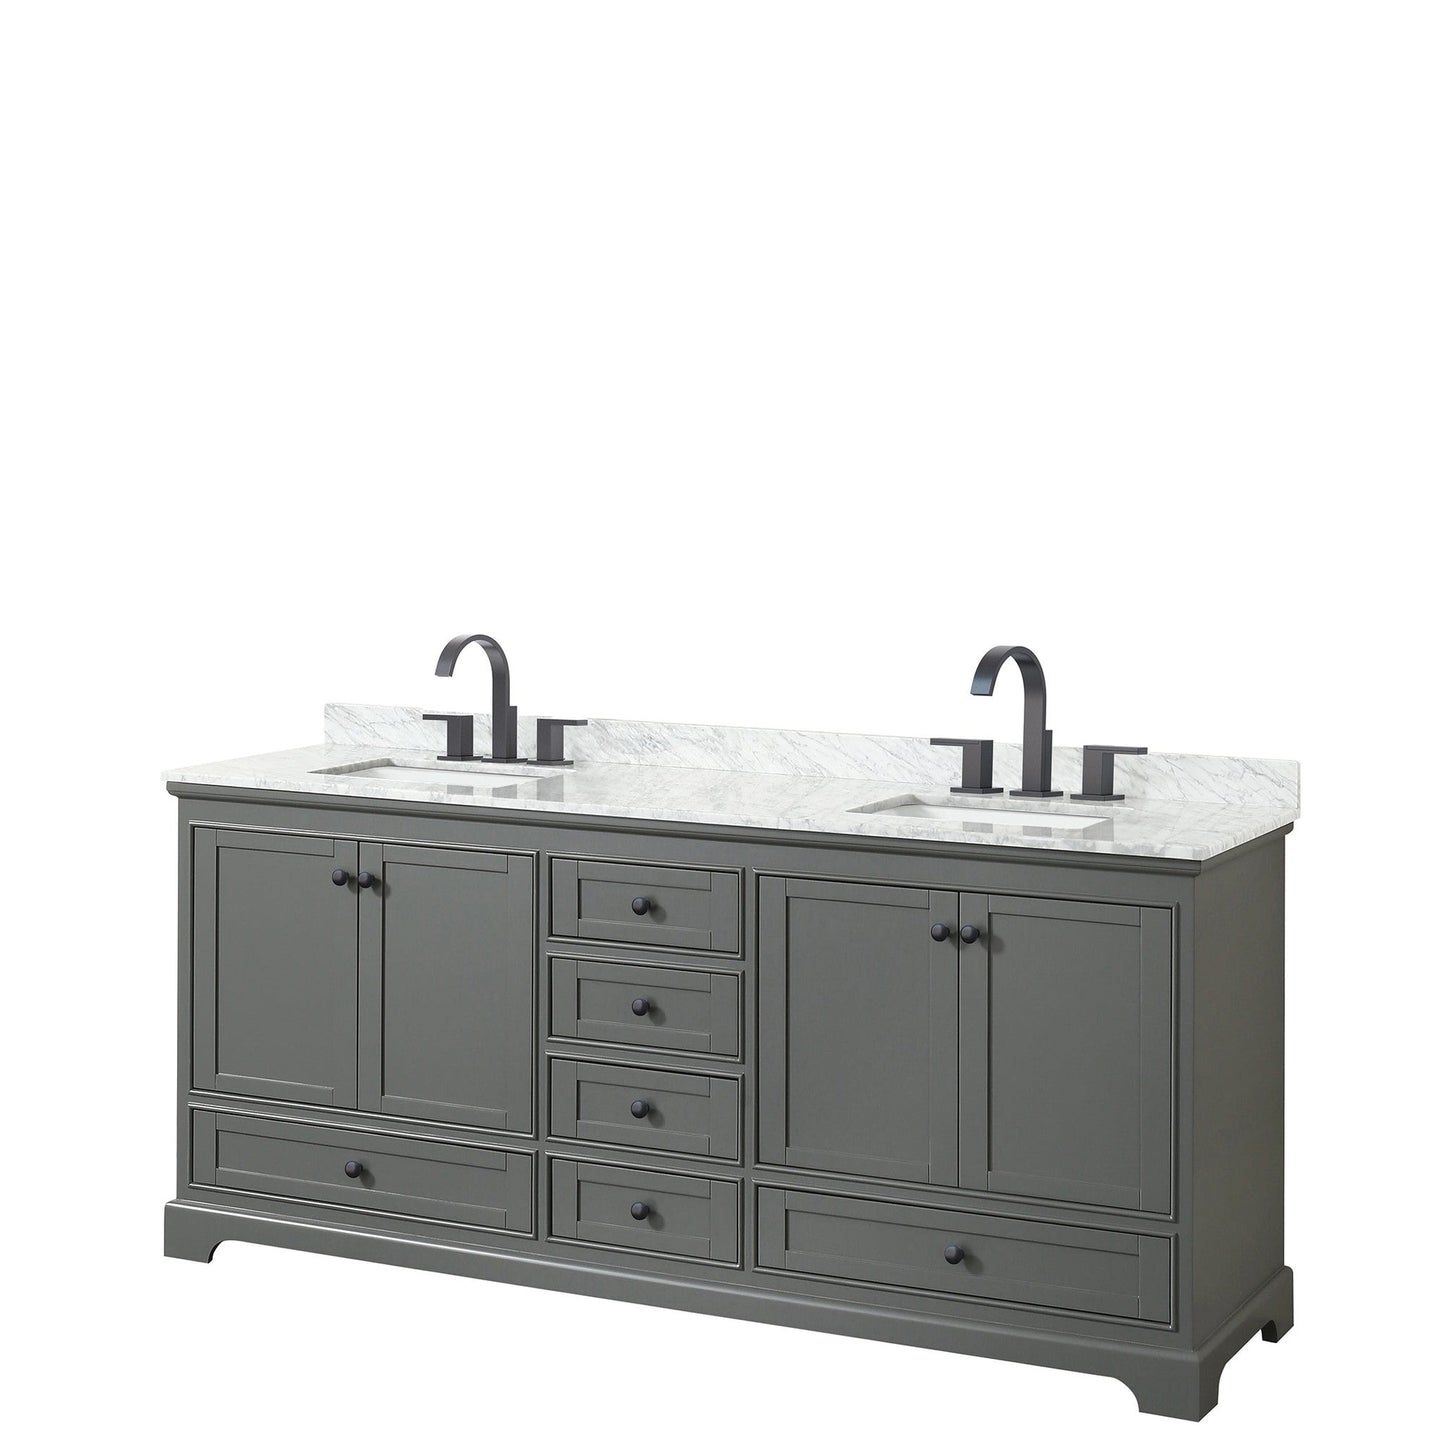 Deborah 80" Double Bathroom Vanity in Dark Gray, White Carrara Marble Countertop, Undermount Square Sinks, Matte Black Trim